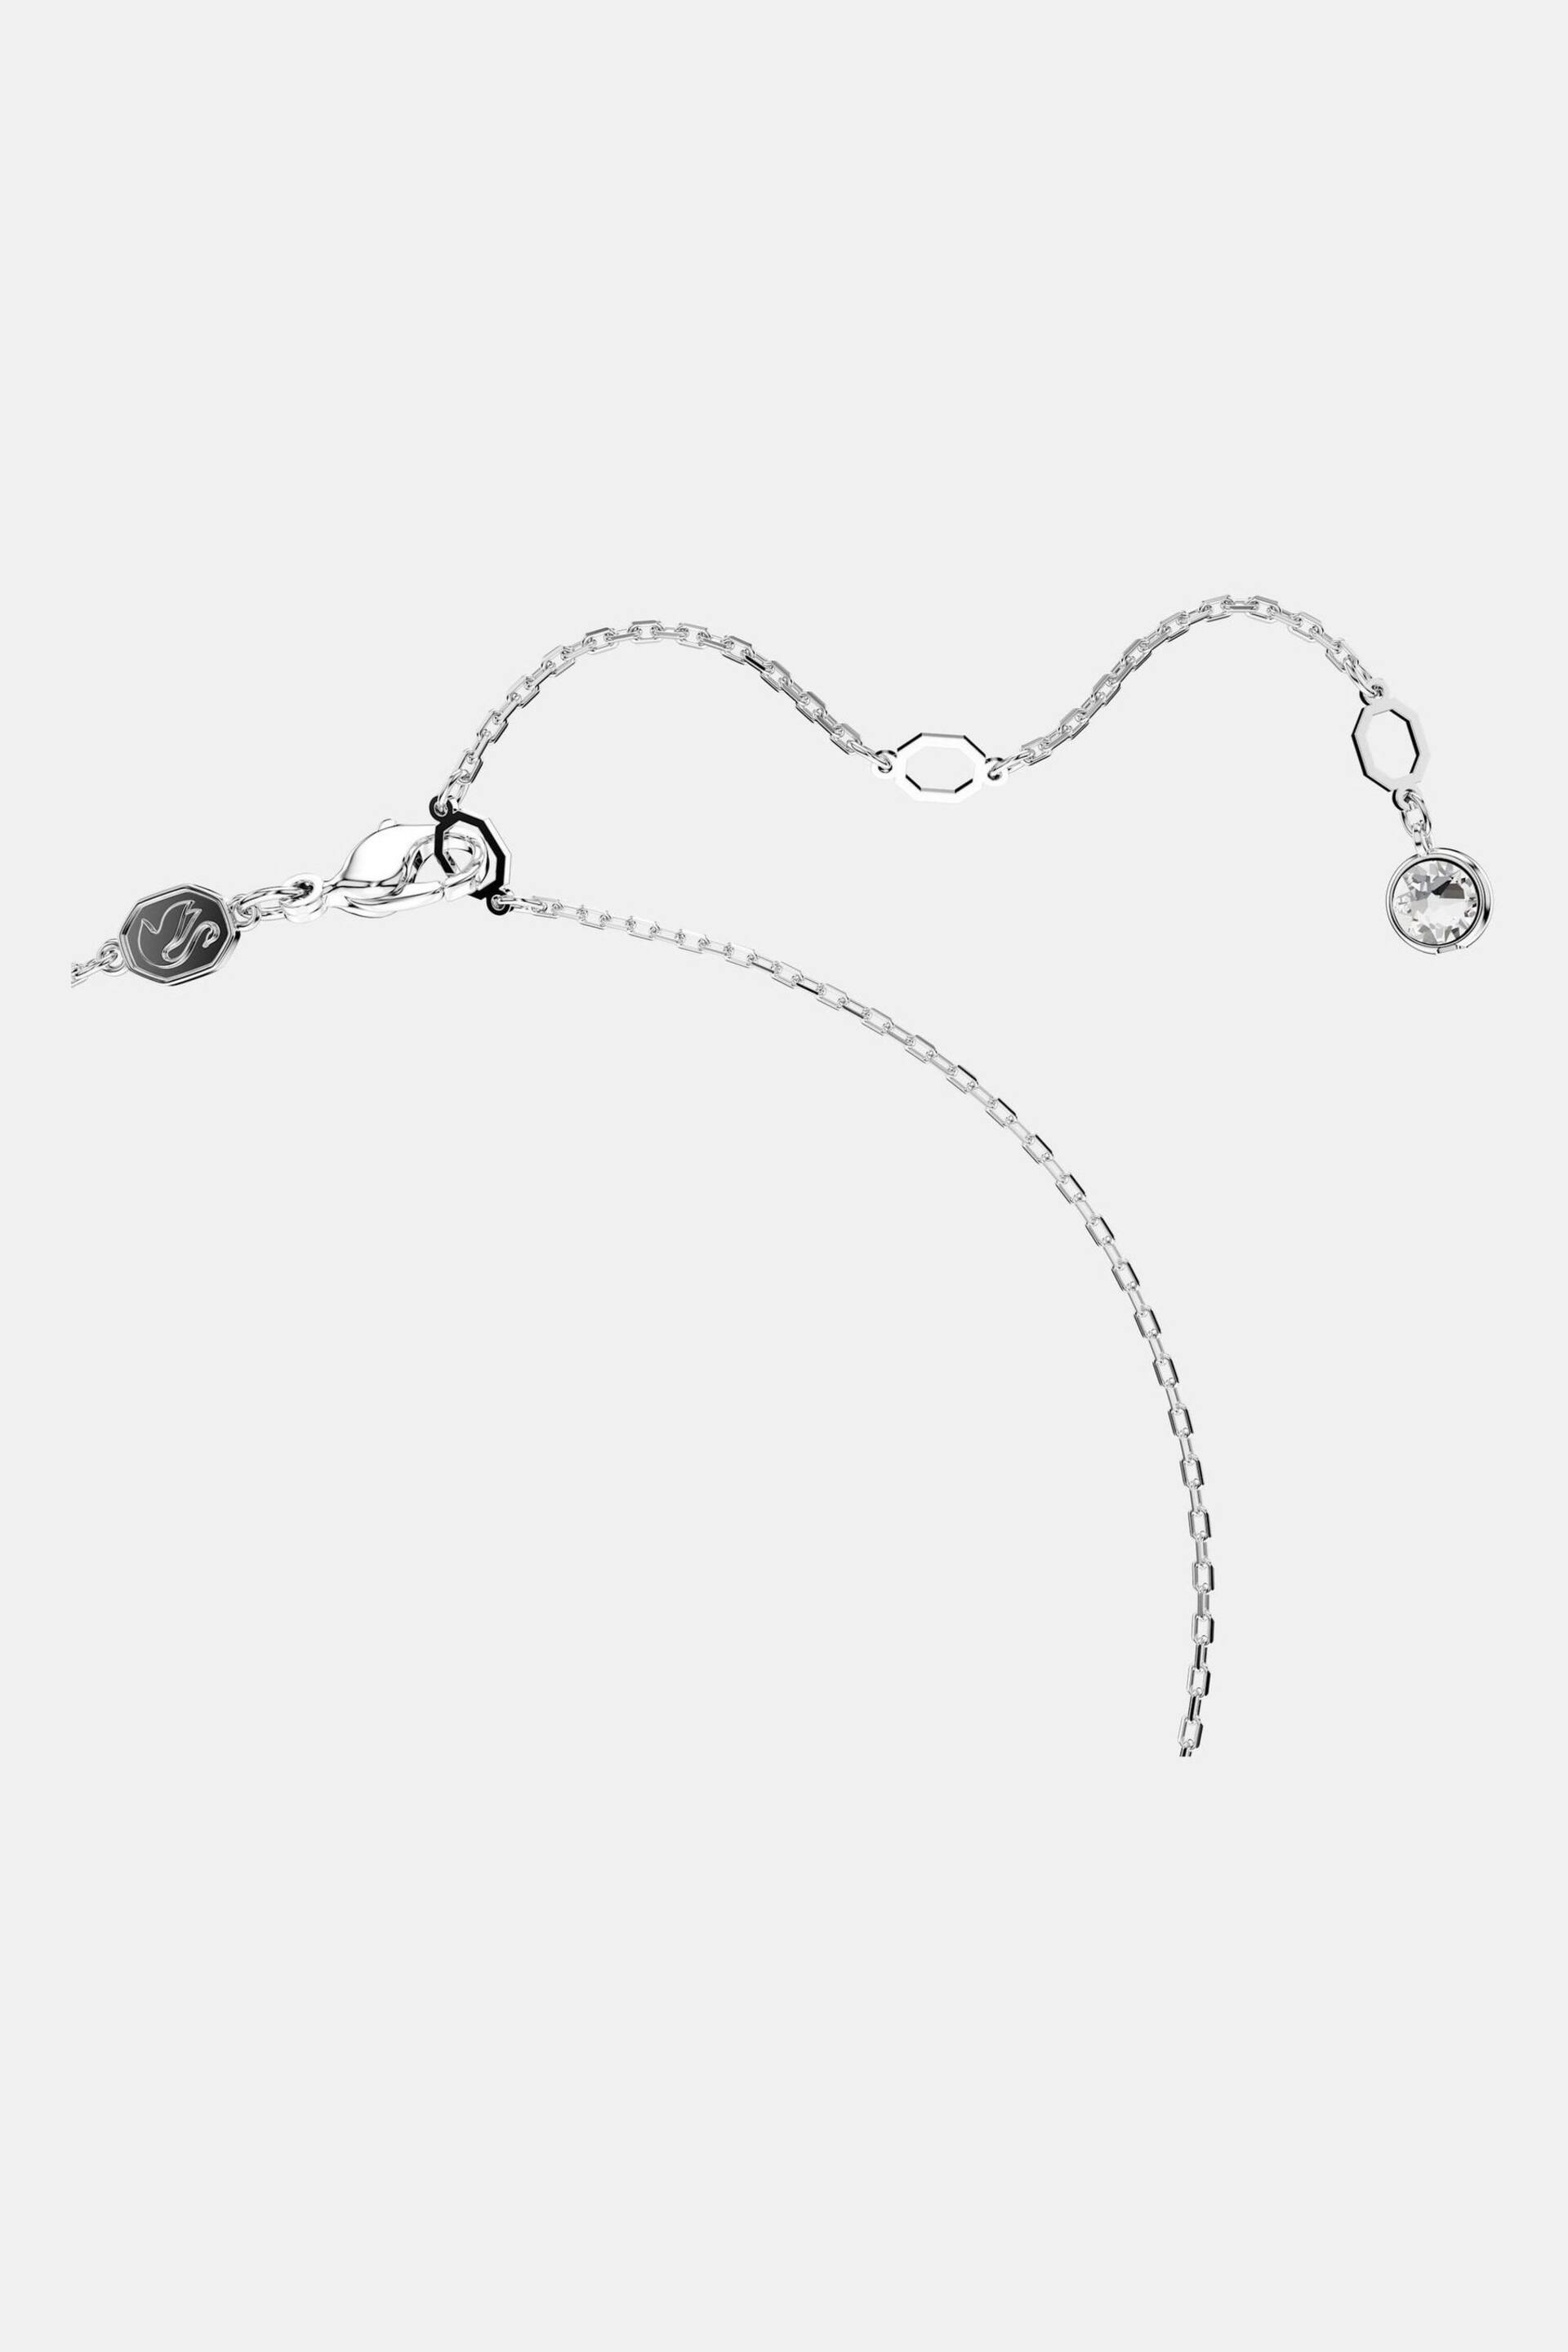 Swarovski Silver Swarovski Infinity Crystal Pendant Necklace - Image 5 of 5